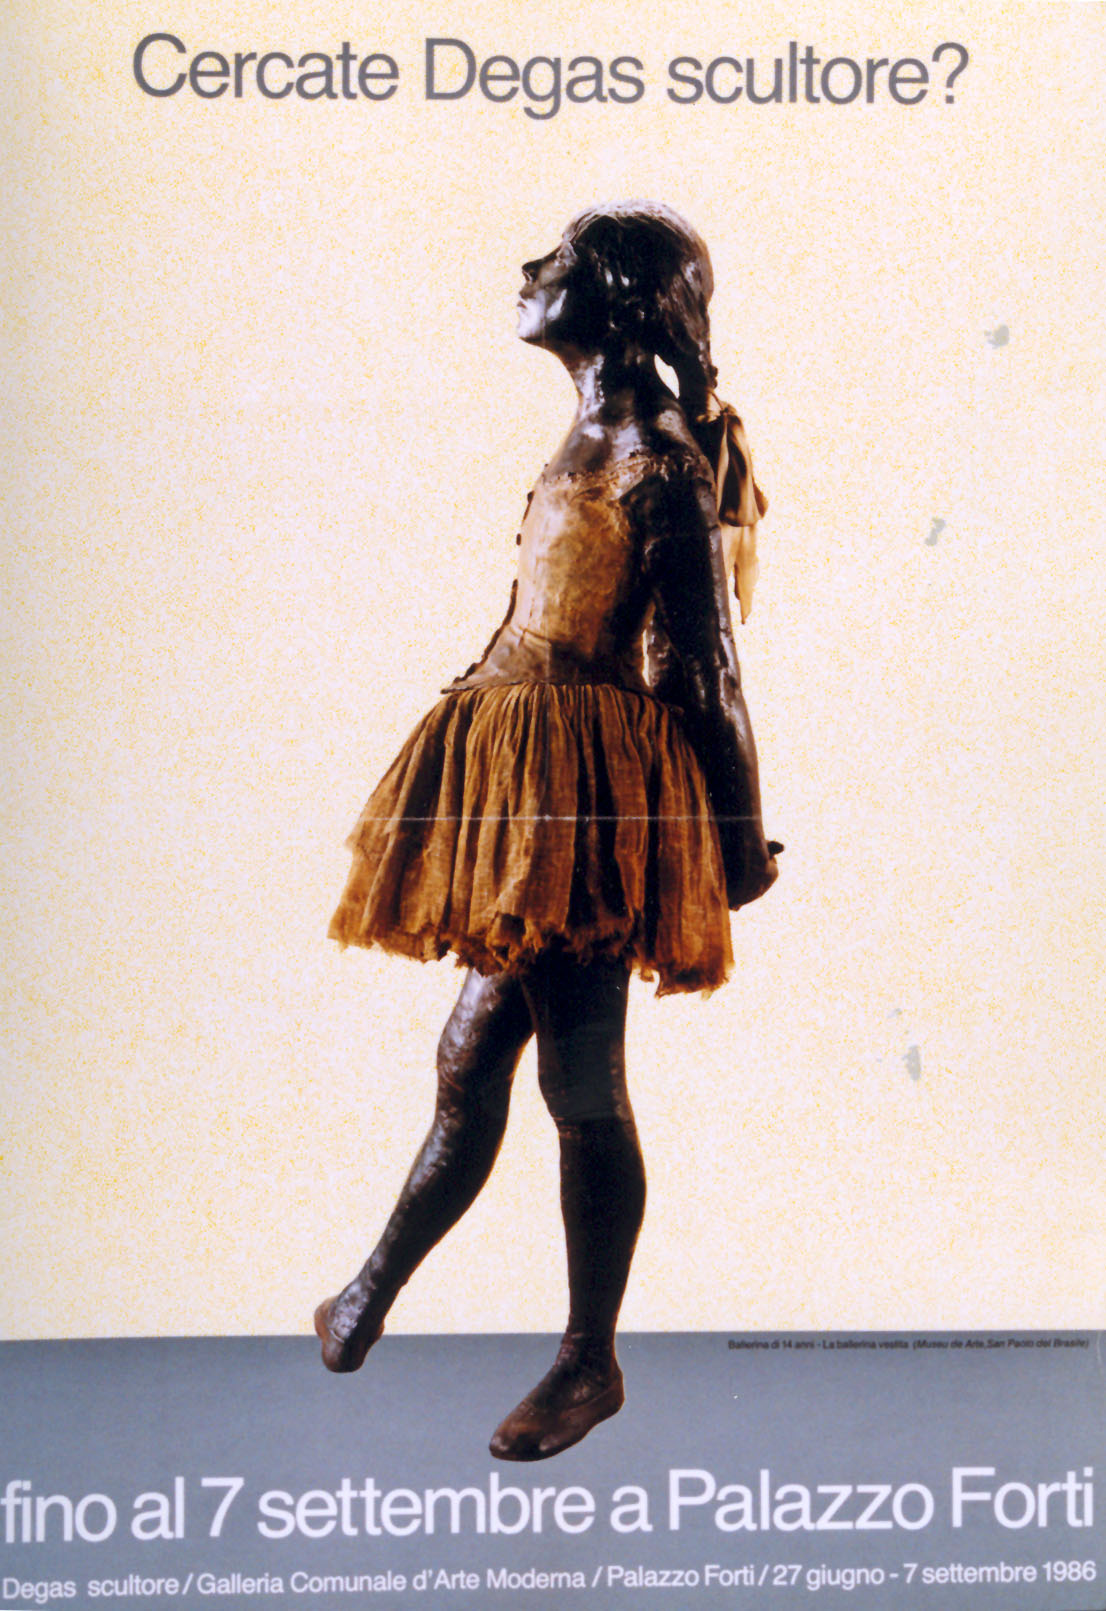 Degas Scultore